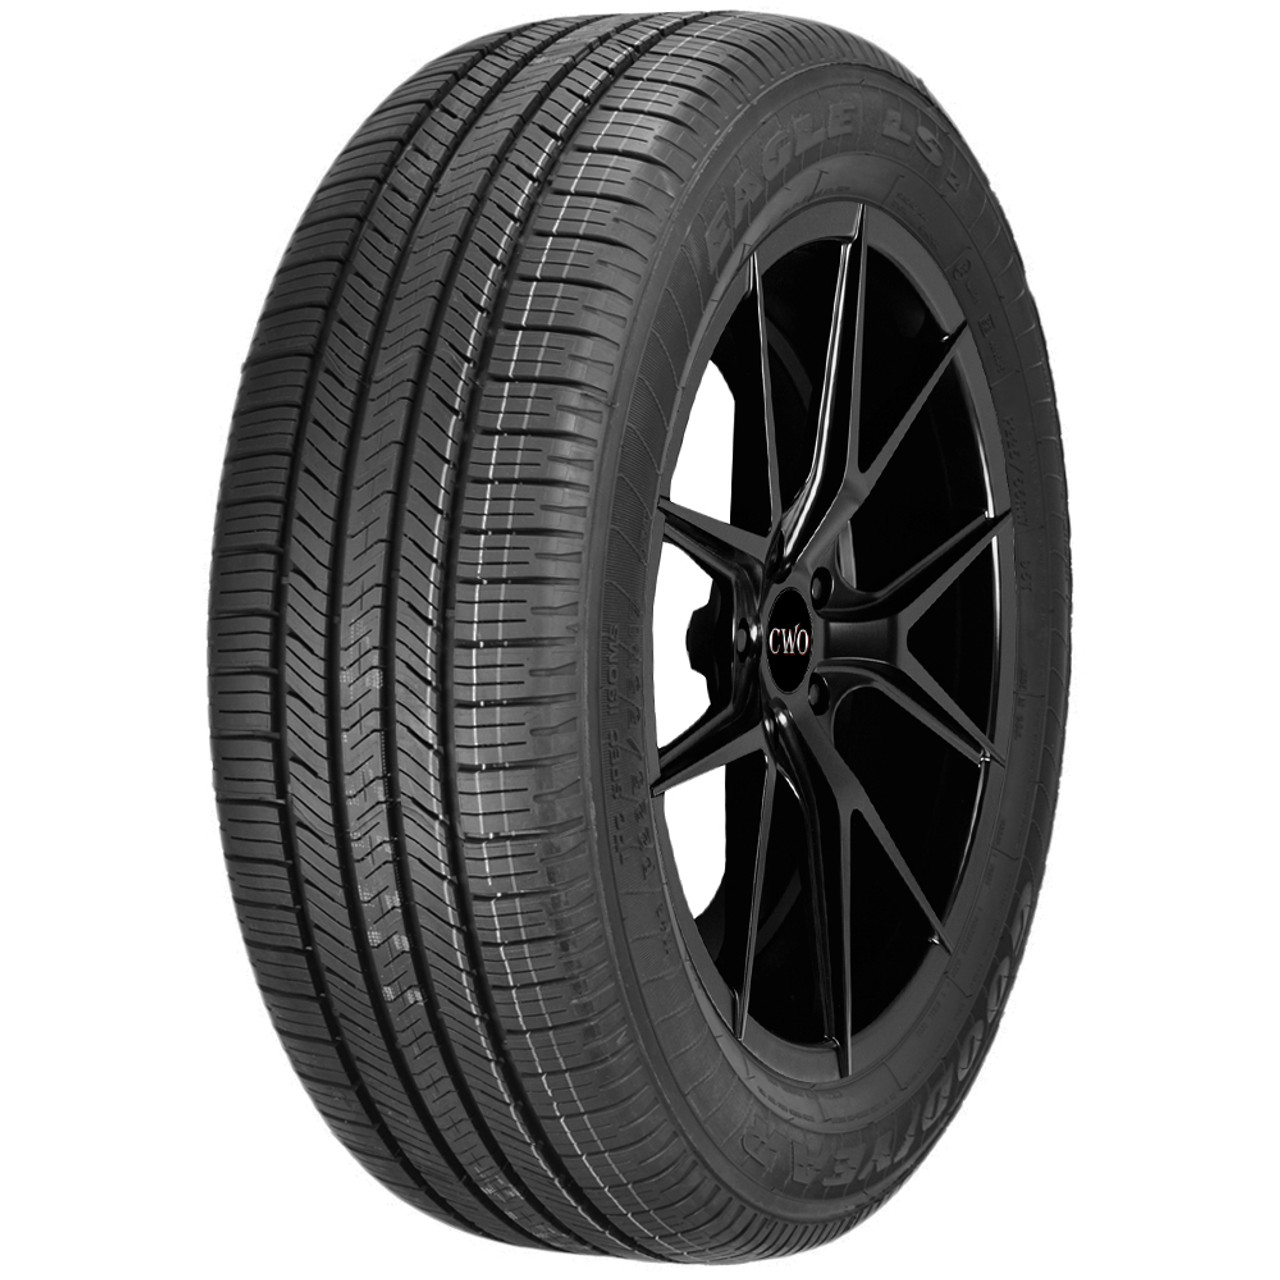 Goodyear Eagle LS-2 Tire 235/45R18 706038163